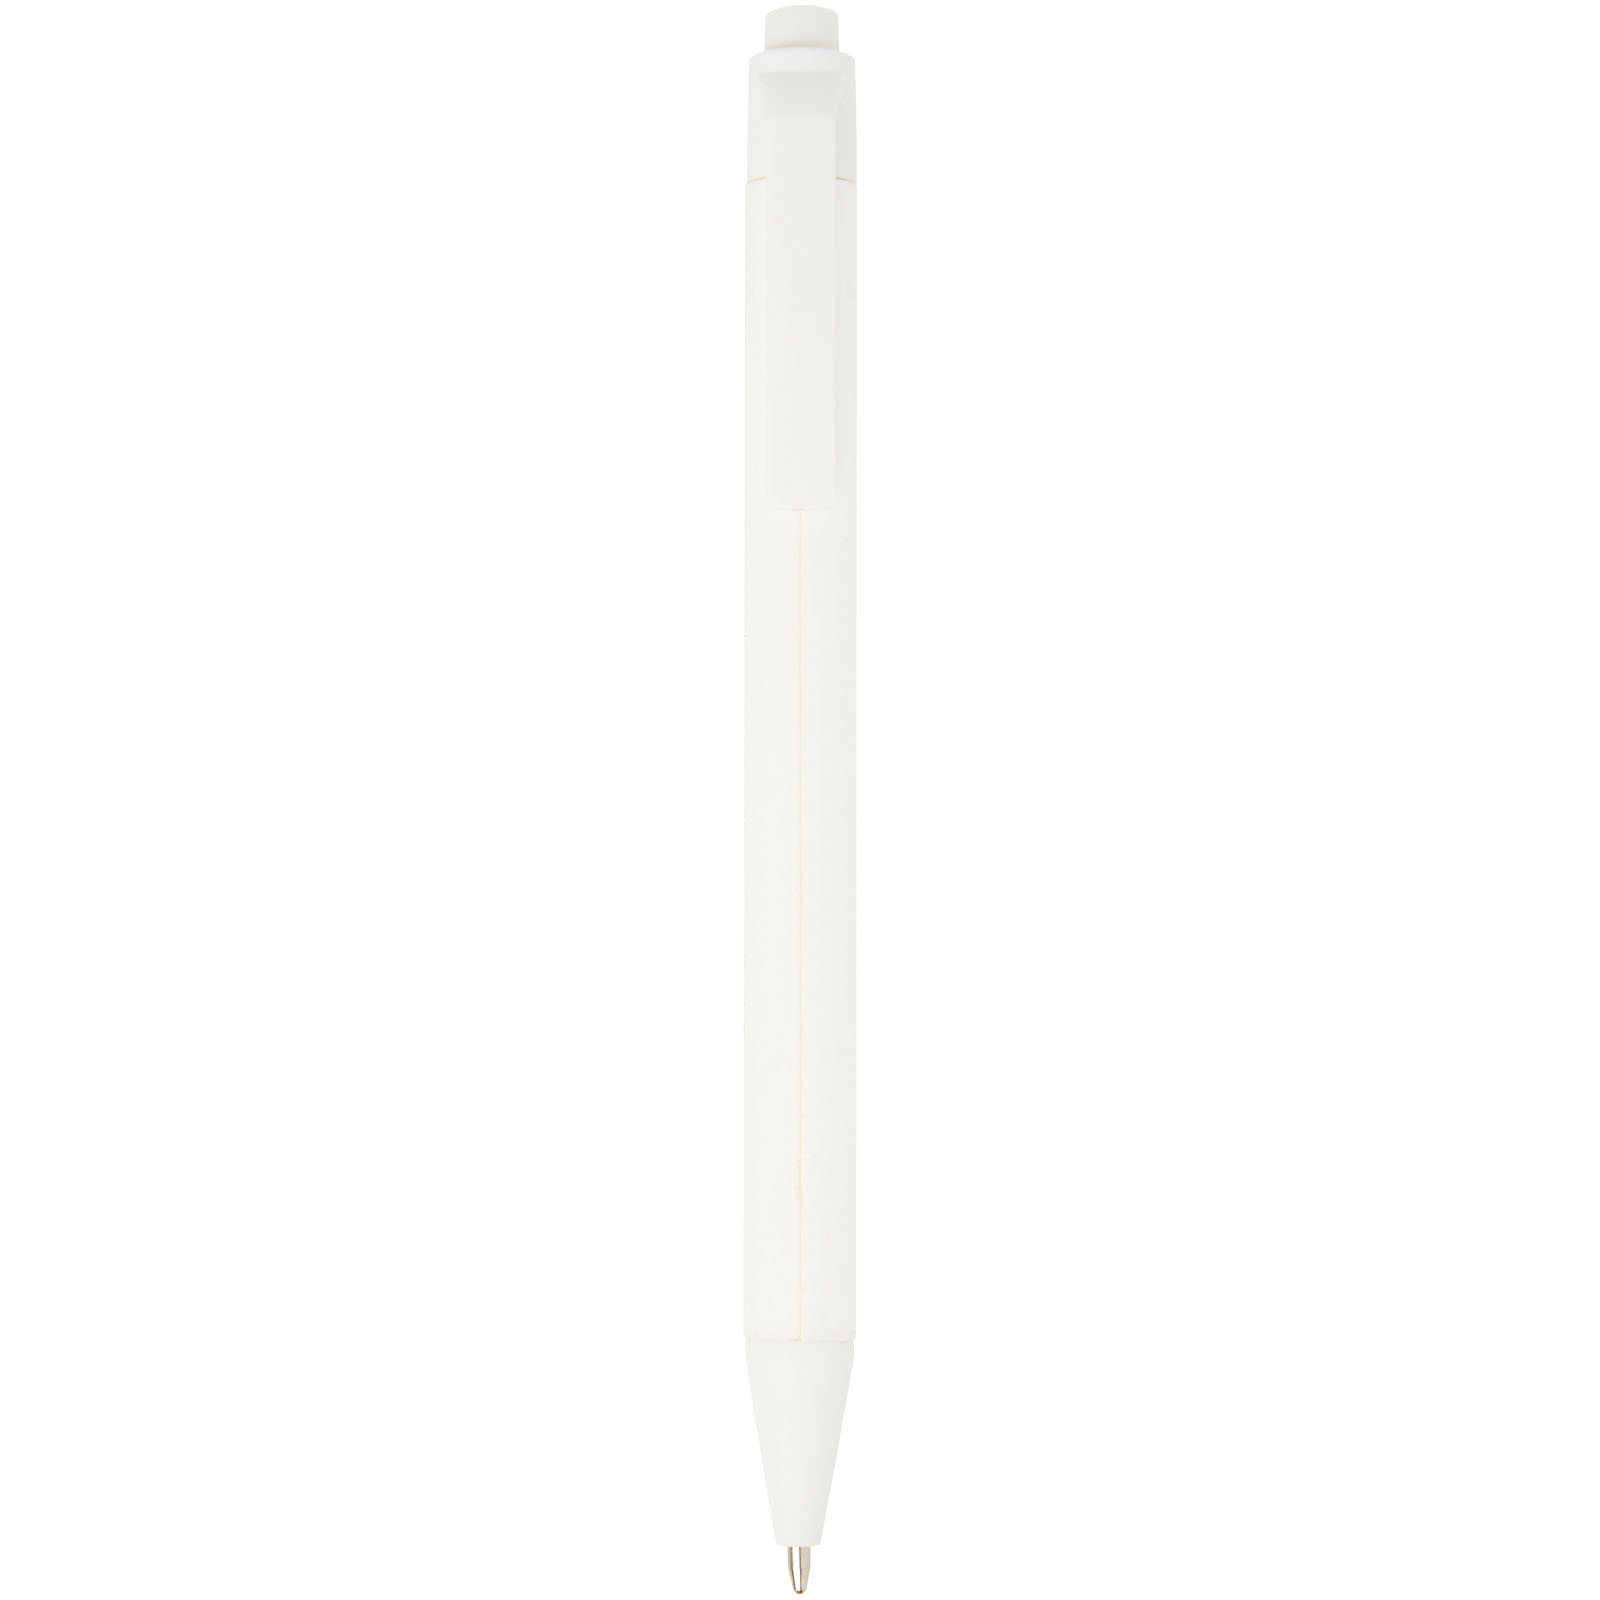 Ballpoint Pens - Chartik monochromatic recycled paper ballpoint pen with matte finish